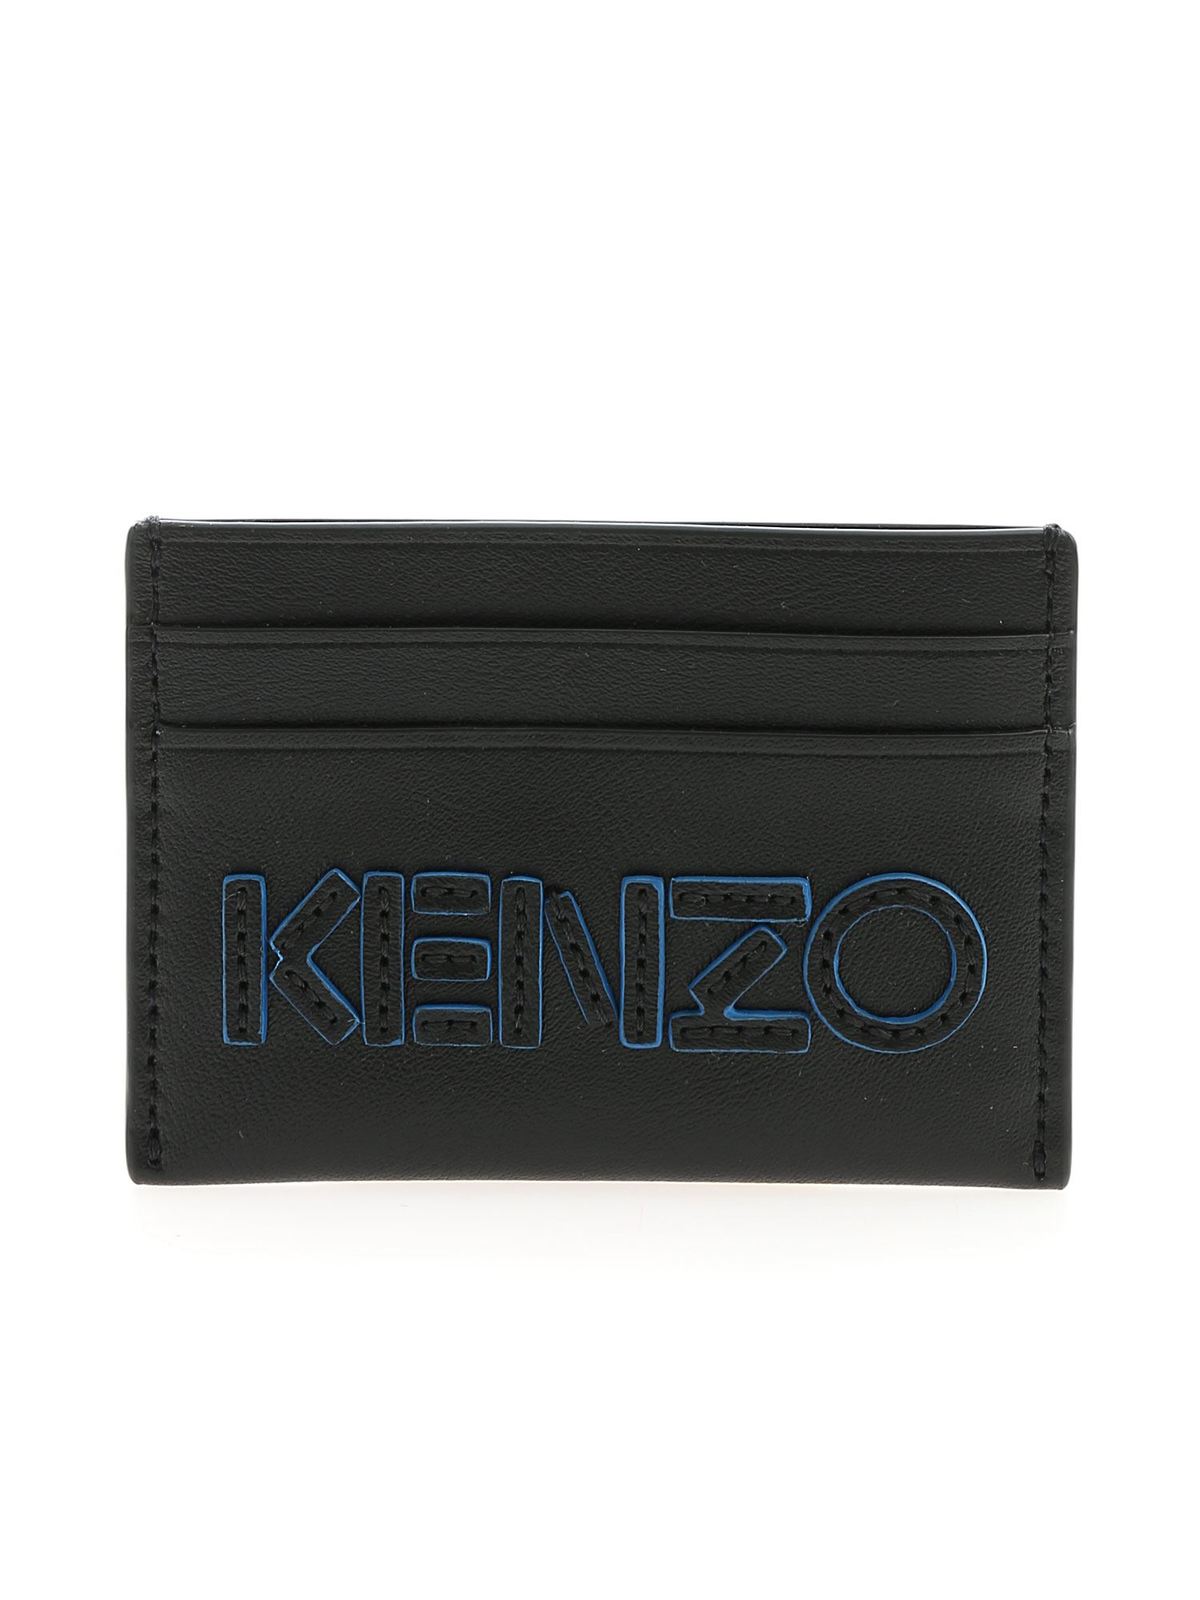 KENZO KENZO LOGO CARD HOLDER IN BLACK